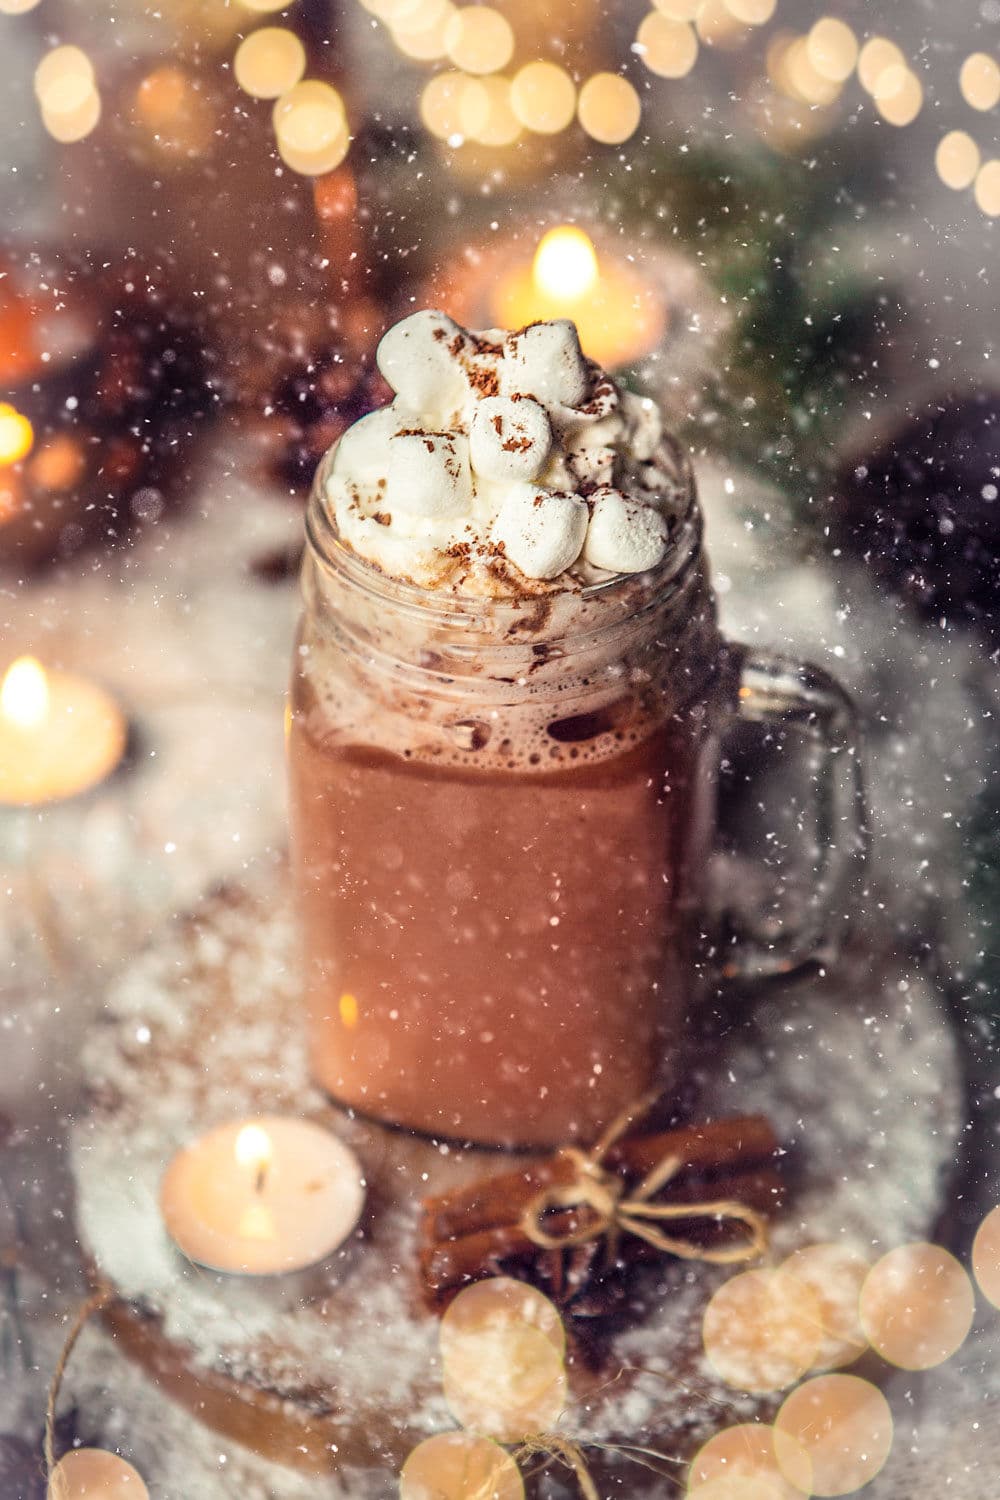 https://www.cookedbyjulie.com/wp-content/uploads/2020/12/crockpot-hot-chocolate-one.jpg